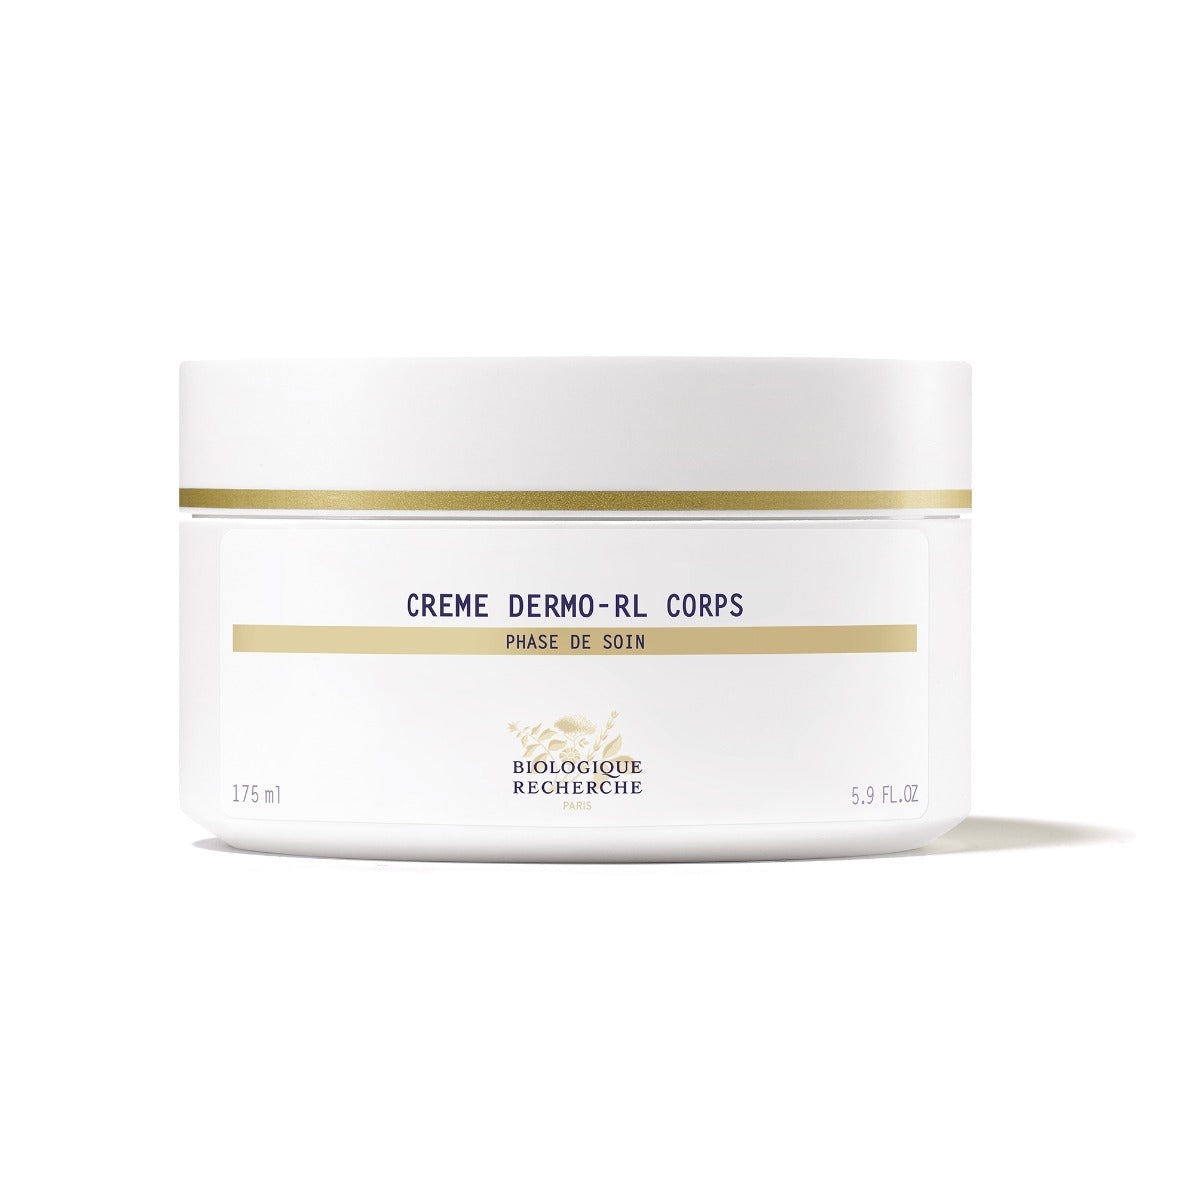 Creme Dermo-RL Corps Lipid Replenishing Body Cream